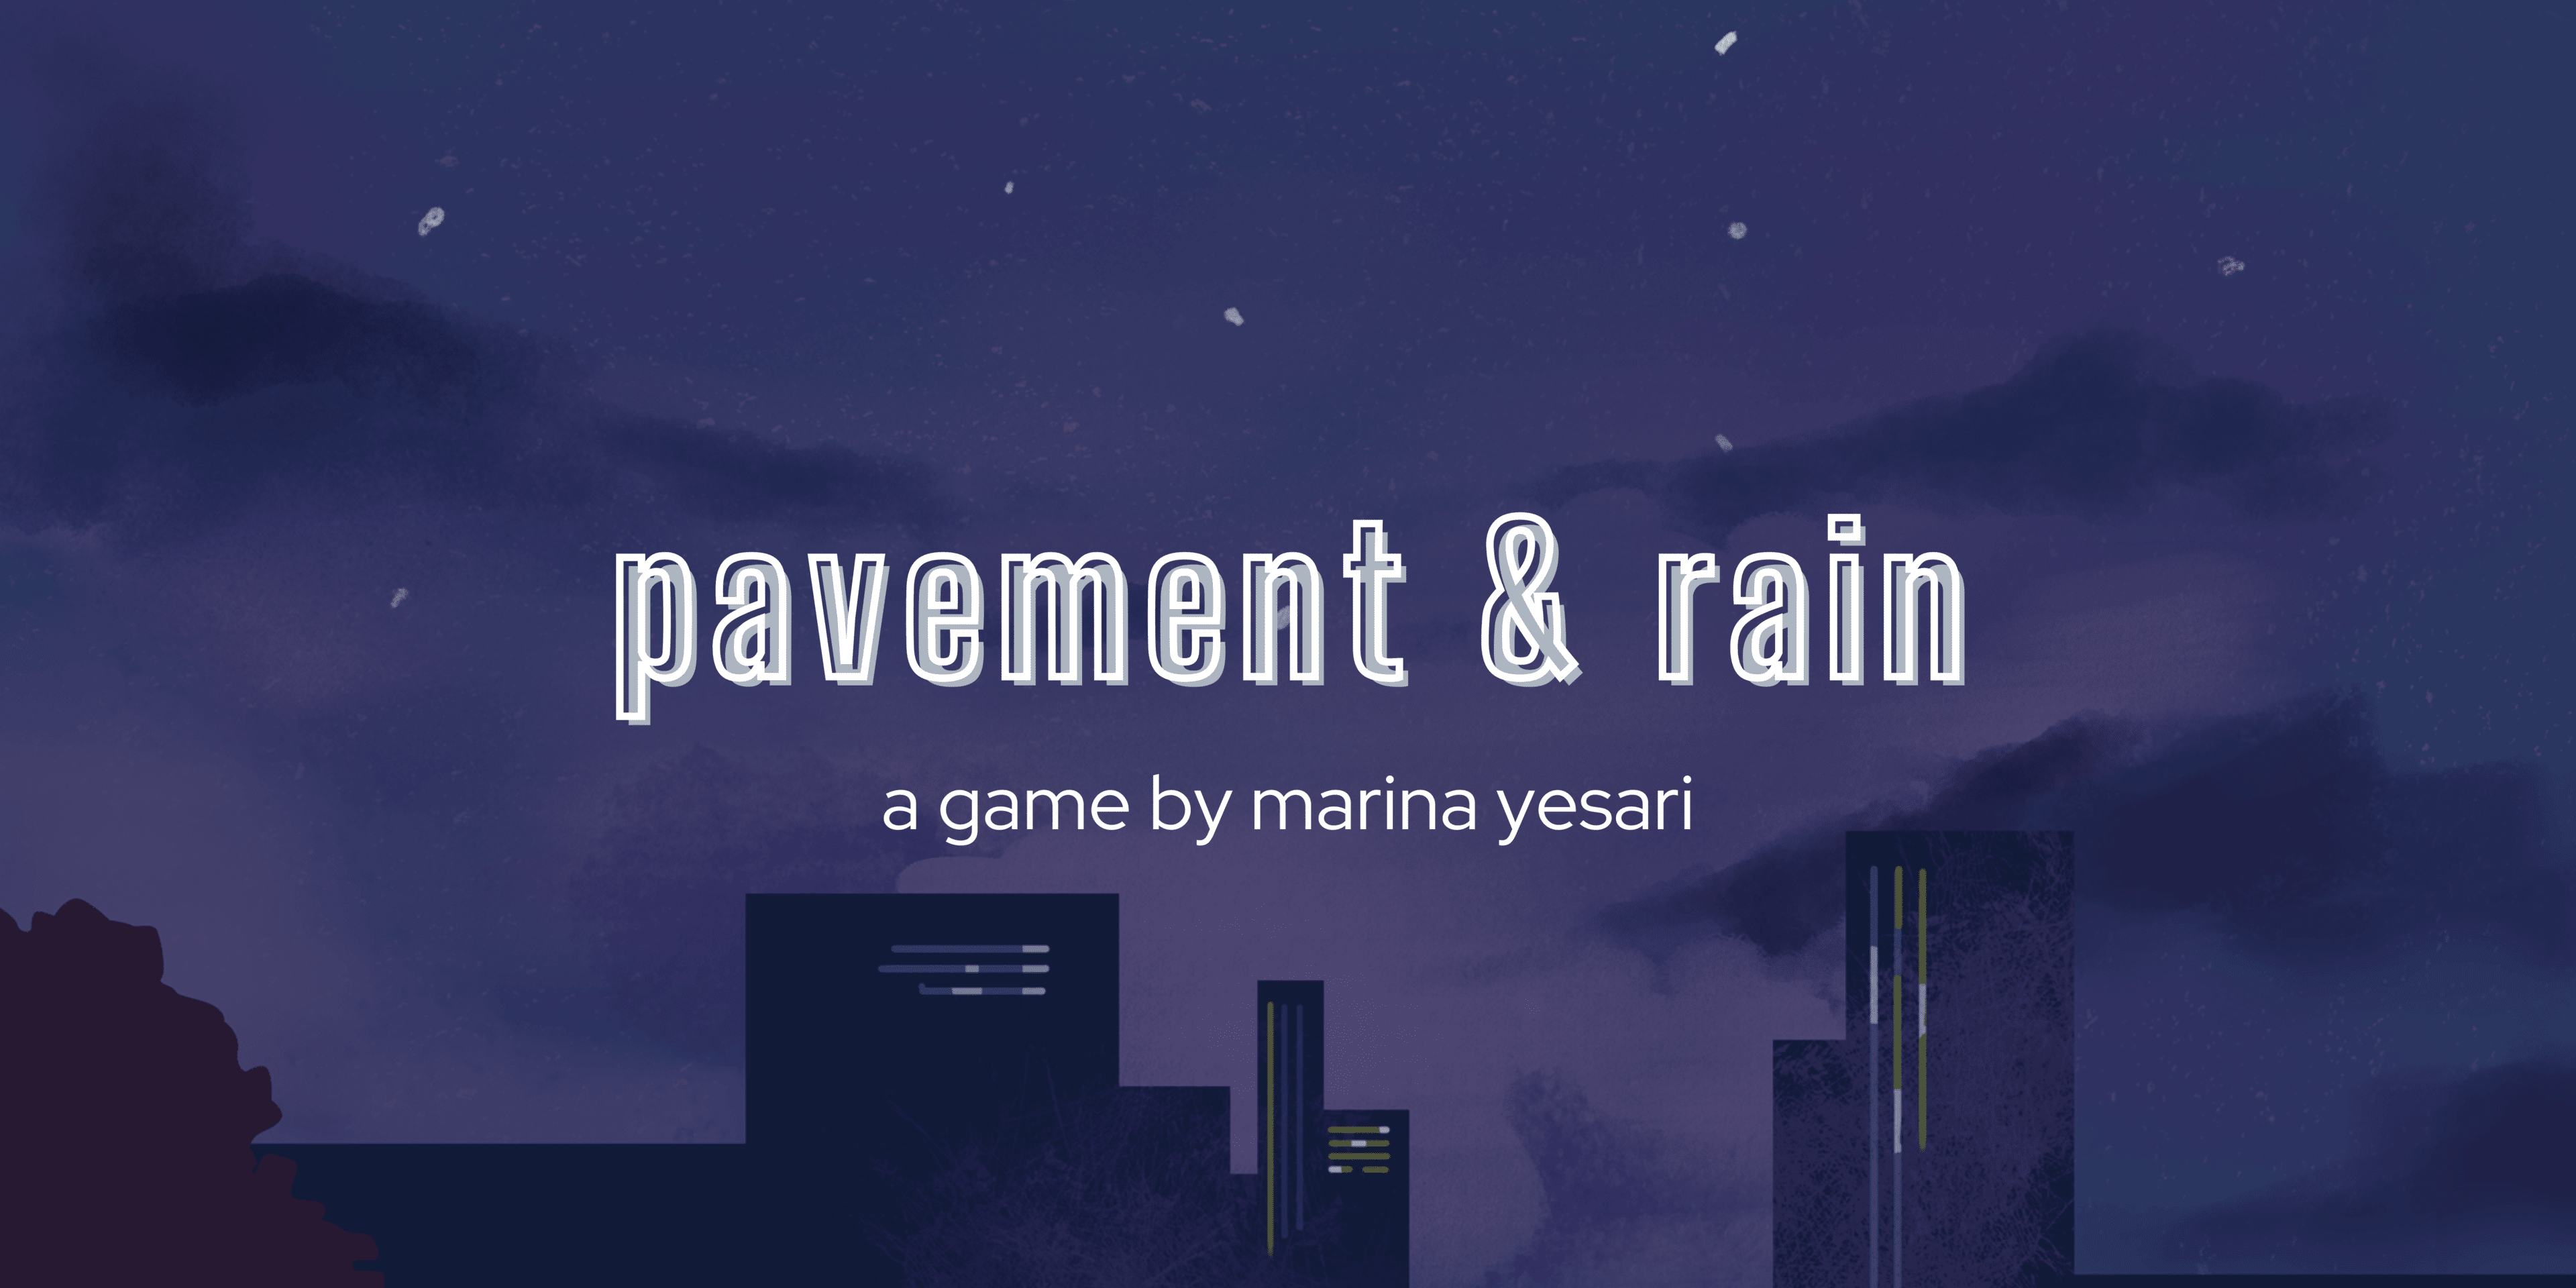 pavement & rain